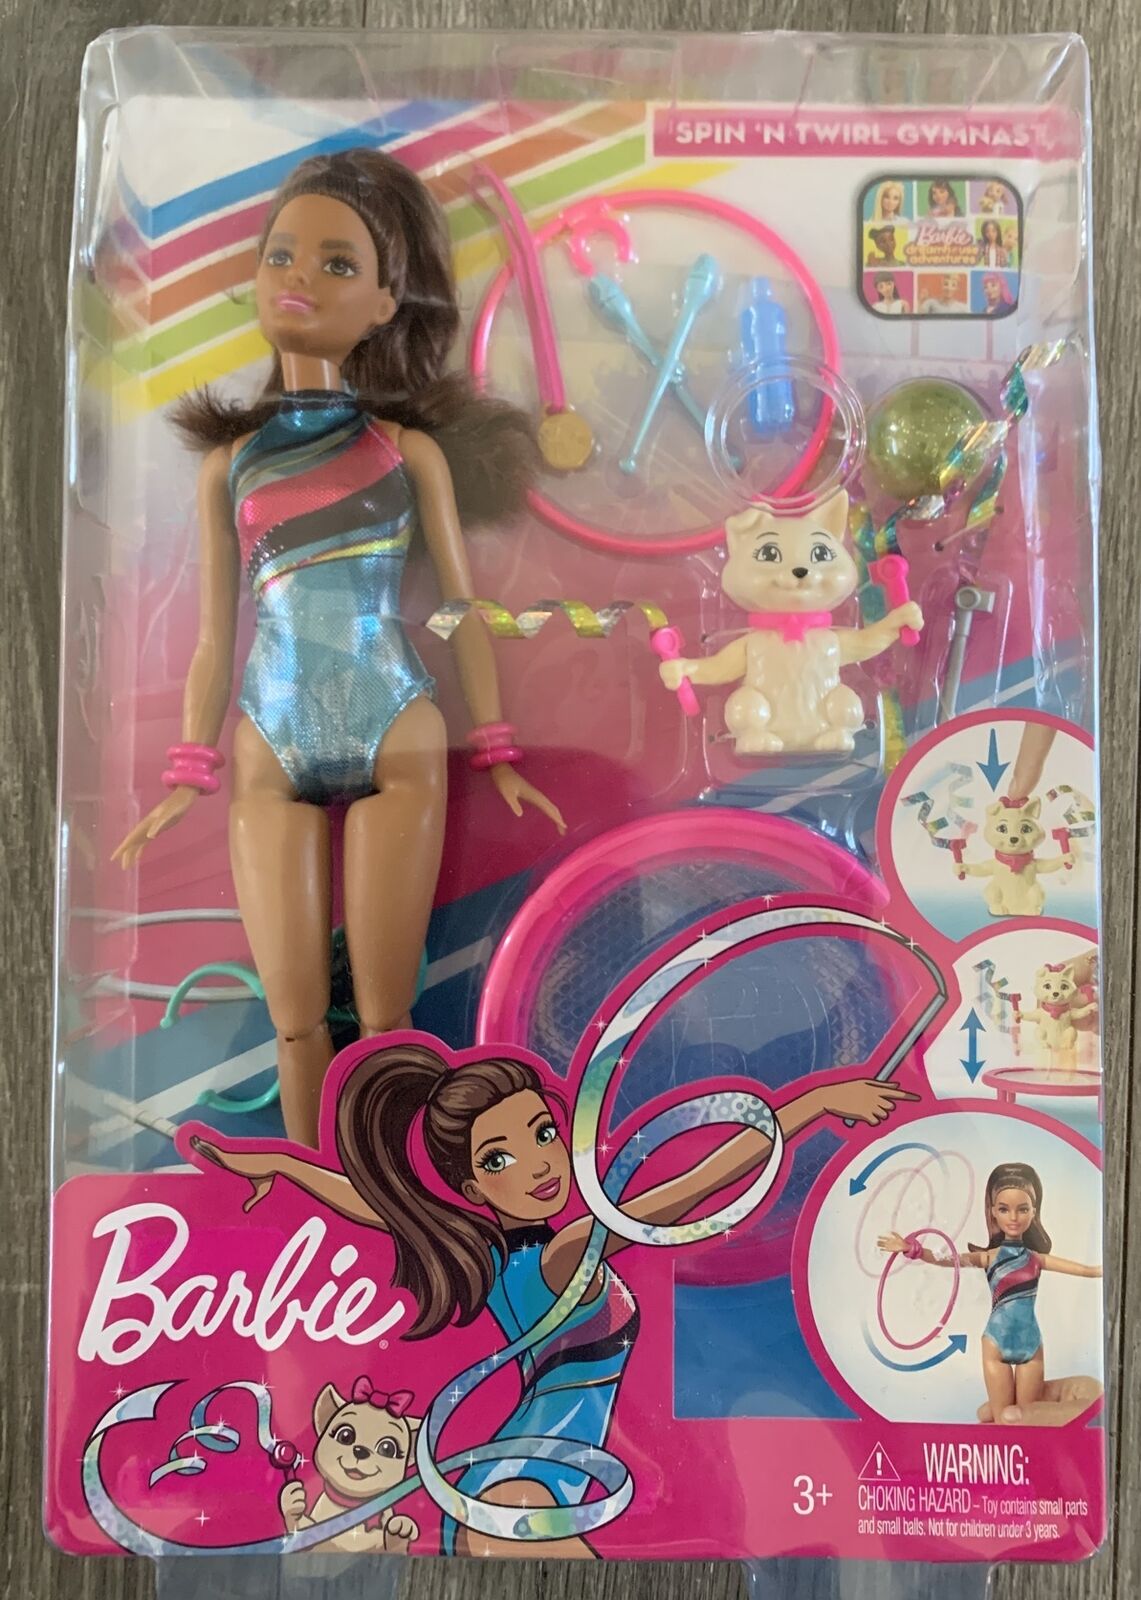 Barbie Dreamhouse Adventures Teresa Spin 'n Twirl Gymnast Doll & Pet Playset New Mattel GHK24